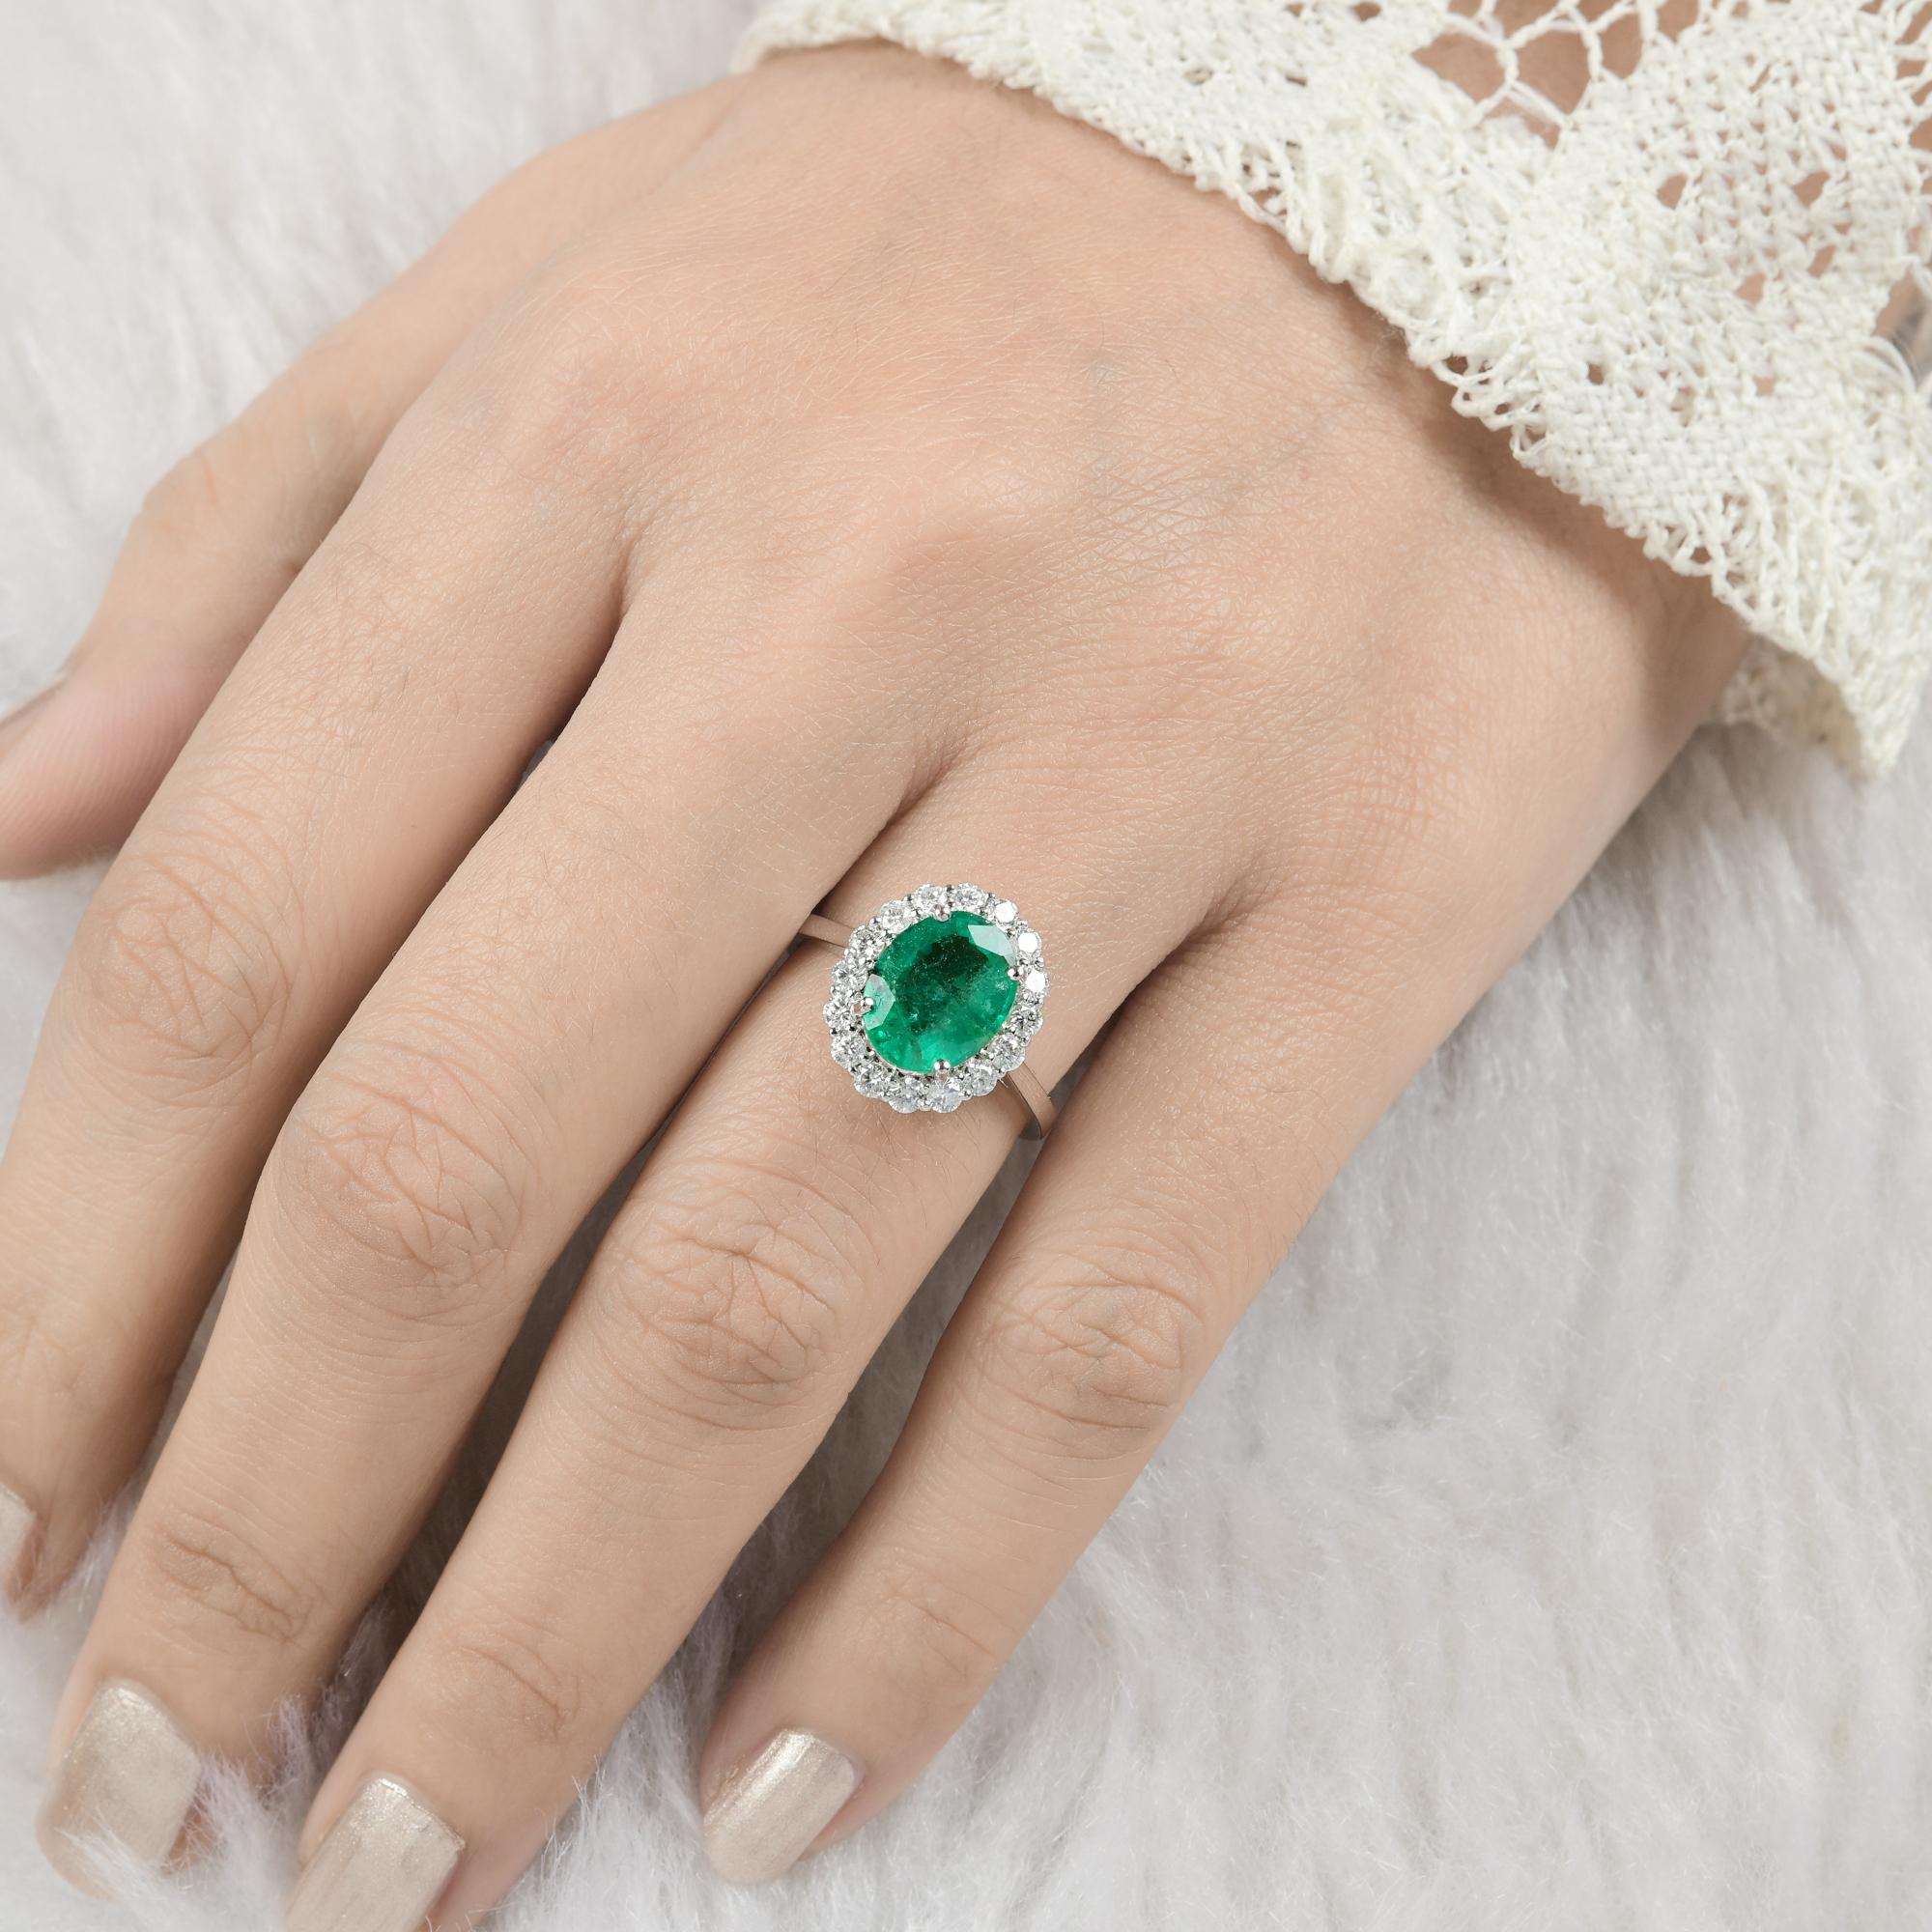 Oval Cut Oval Shape Emerald Gemstone Ring Diamond 14 Karat White Gold Handmade Jewelry For Sale